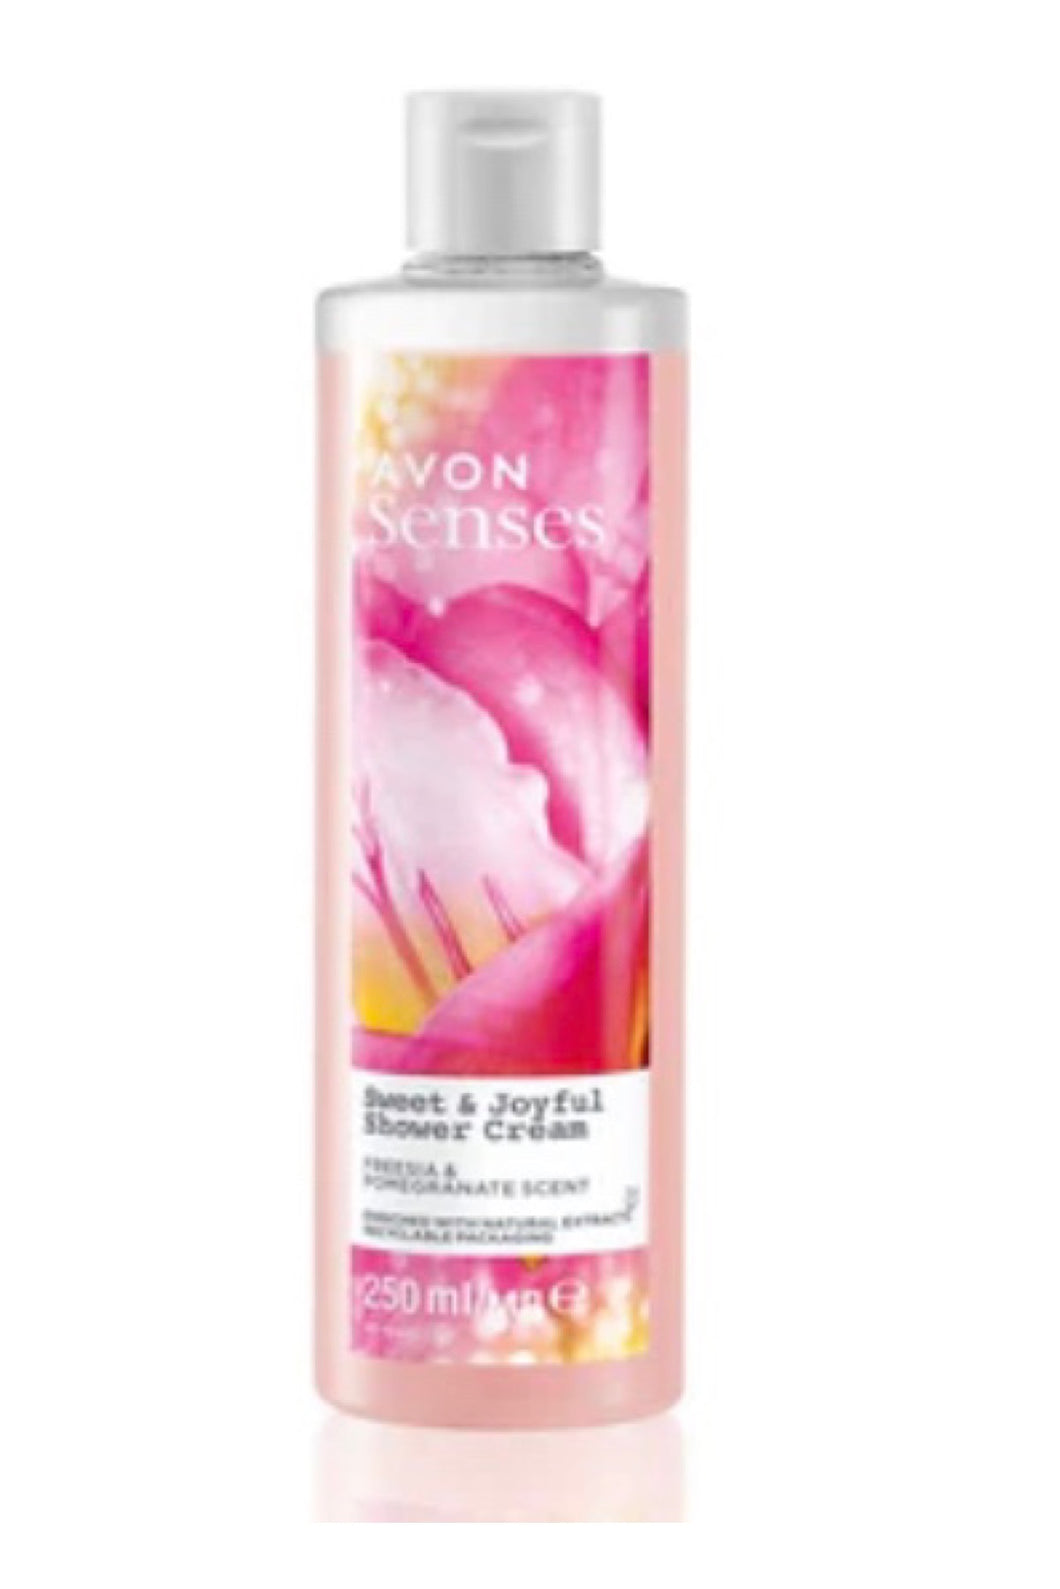 Senses Sweet & Joyful Shower Cream - 250ml Freesia & Pomegranate Scented